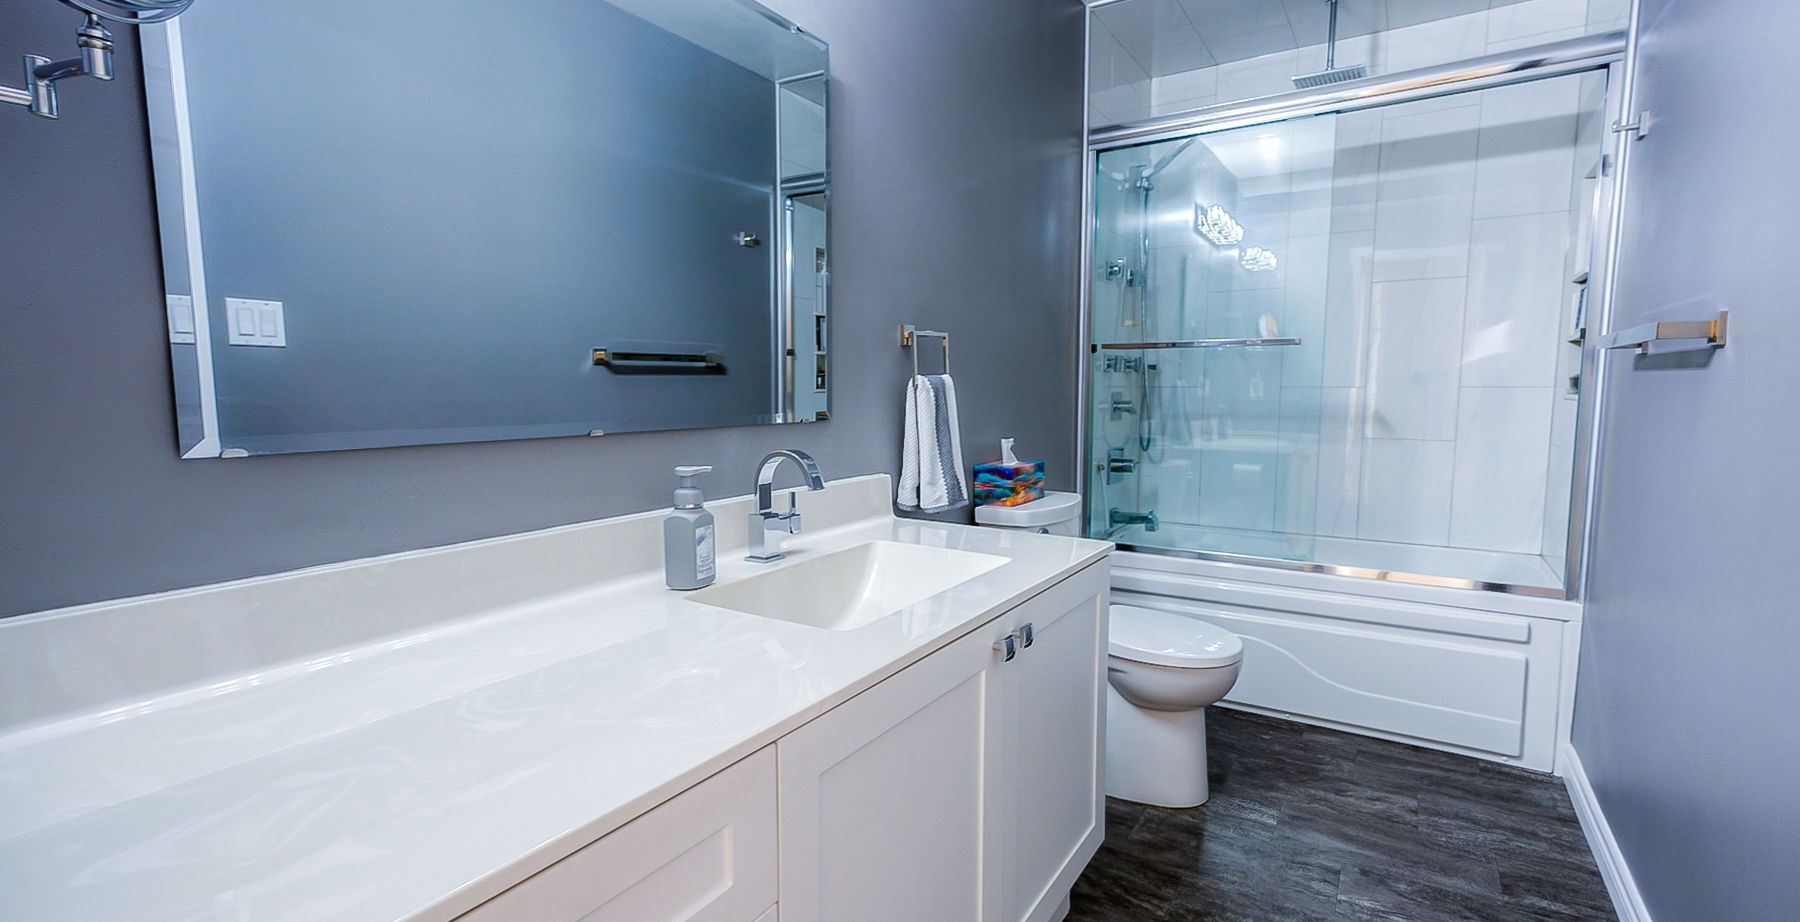 full bathroom with wood-type flooring, bath / shower combo with glass door, mirror, toilet, and vanity